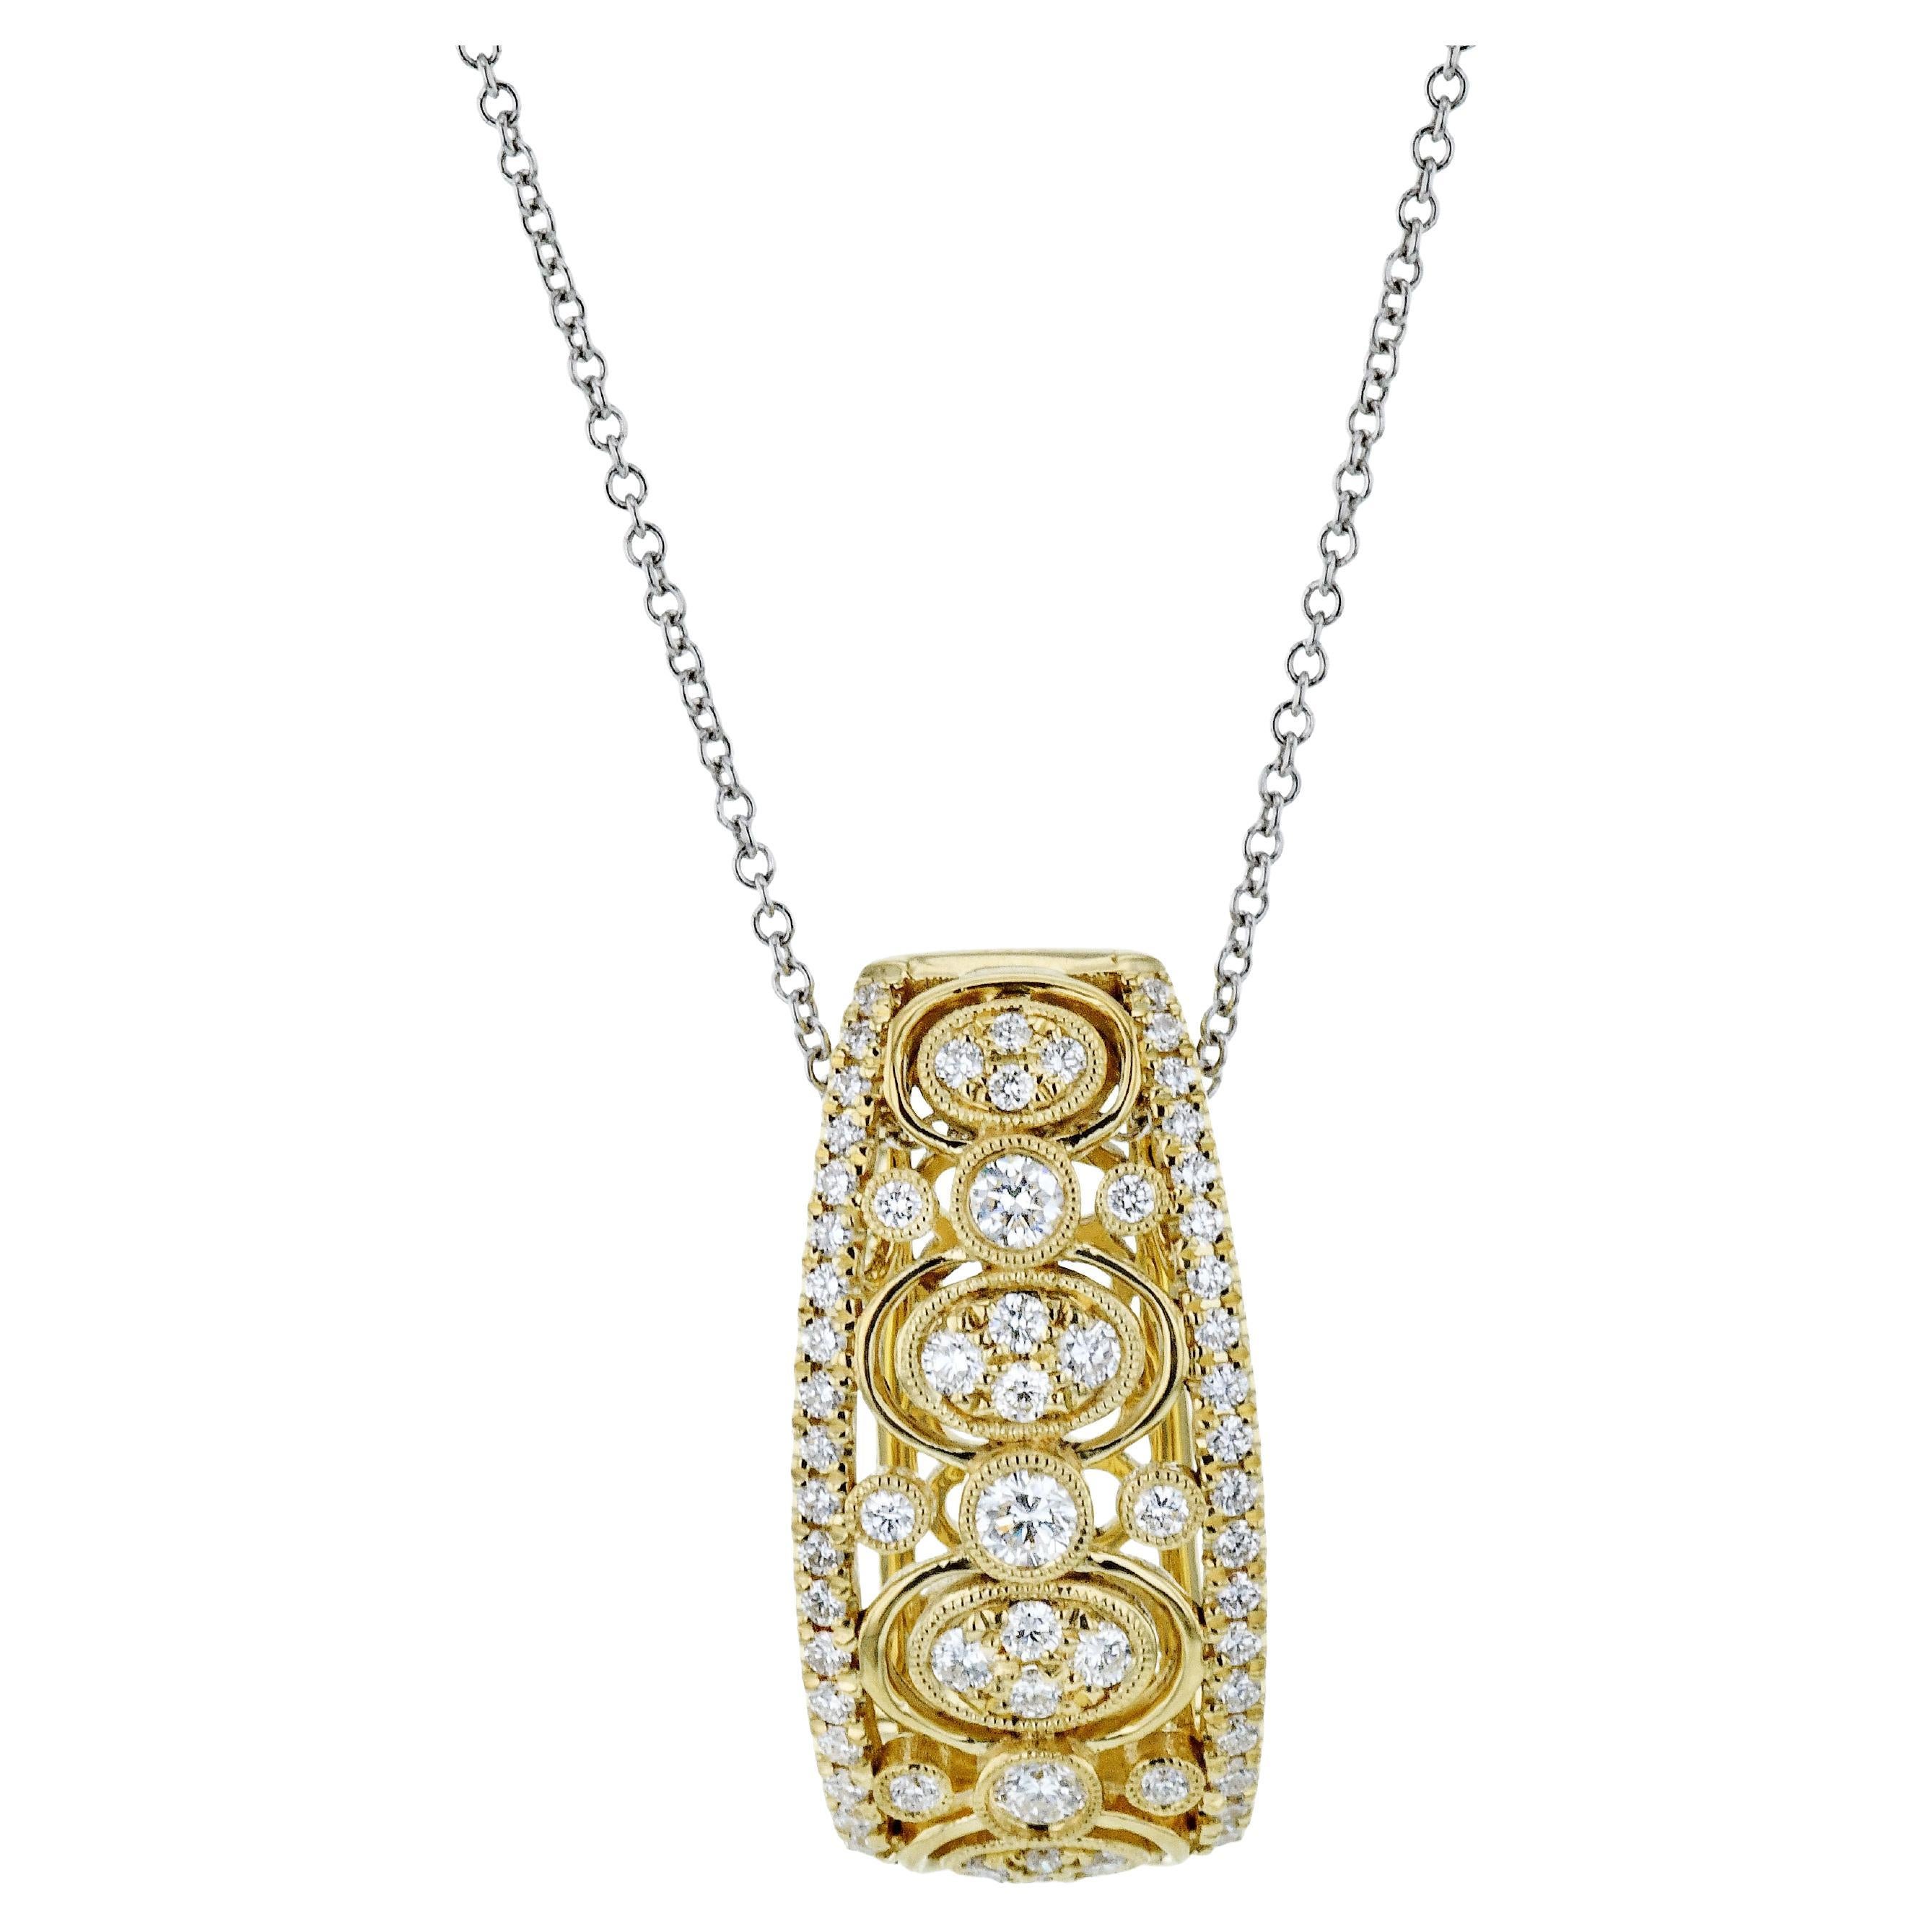 Simon G. Vintage Style Filigree Diamond Pendant Necklace in 18K Yellow Gold